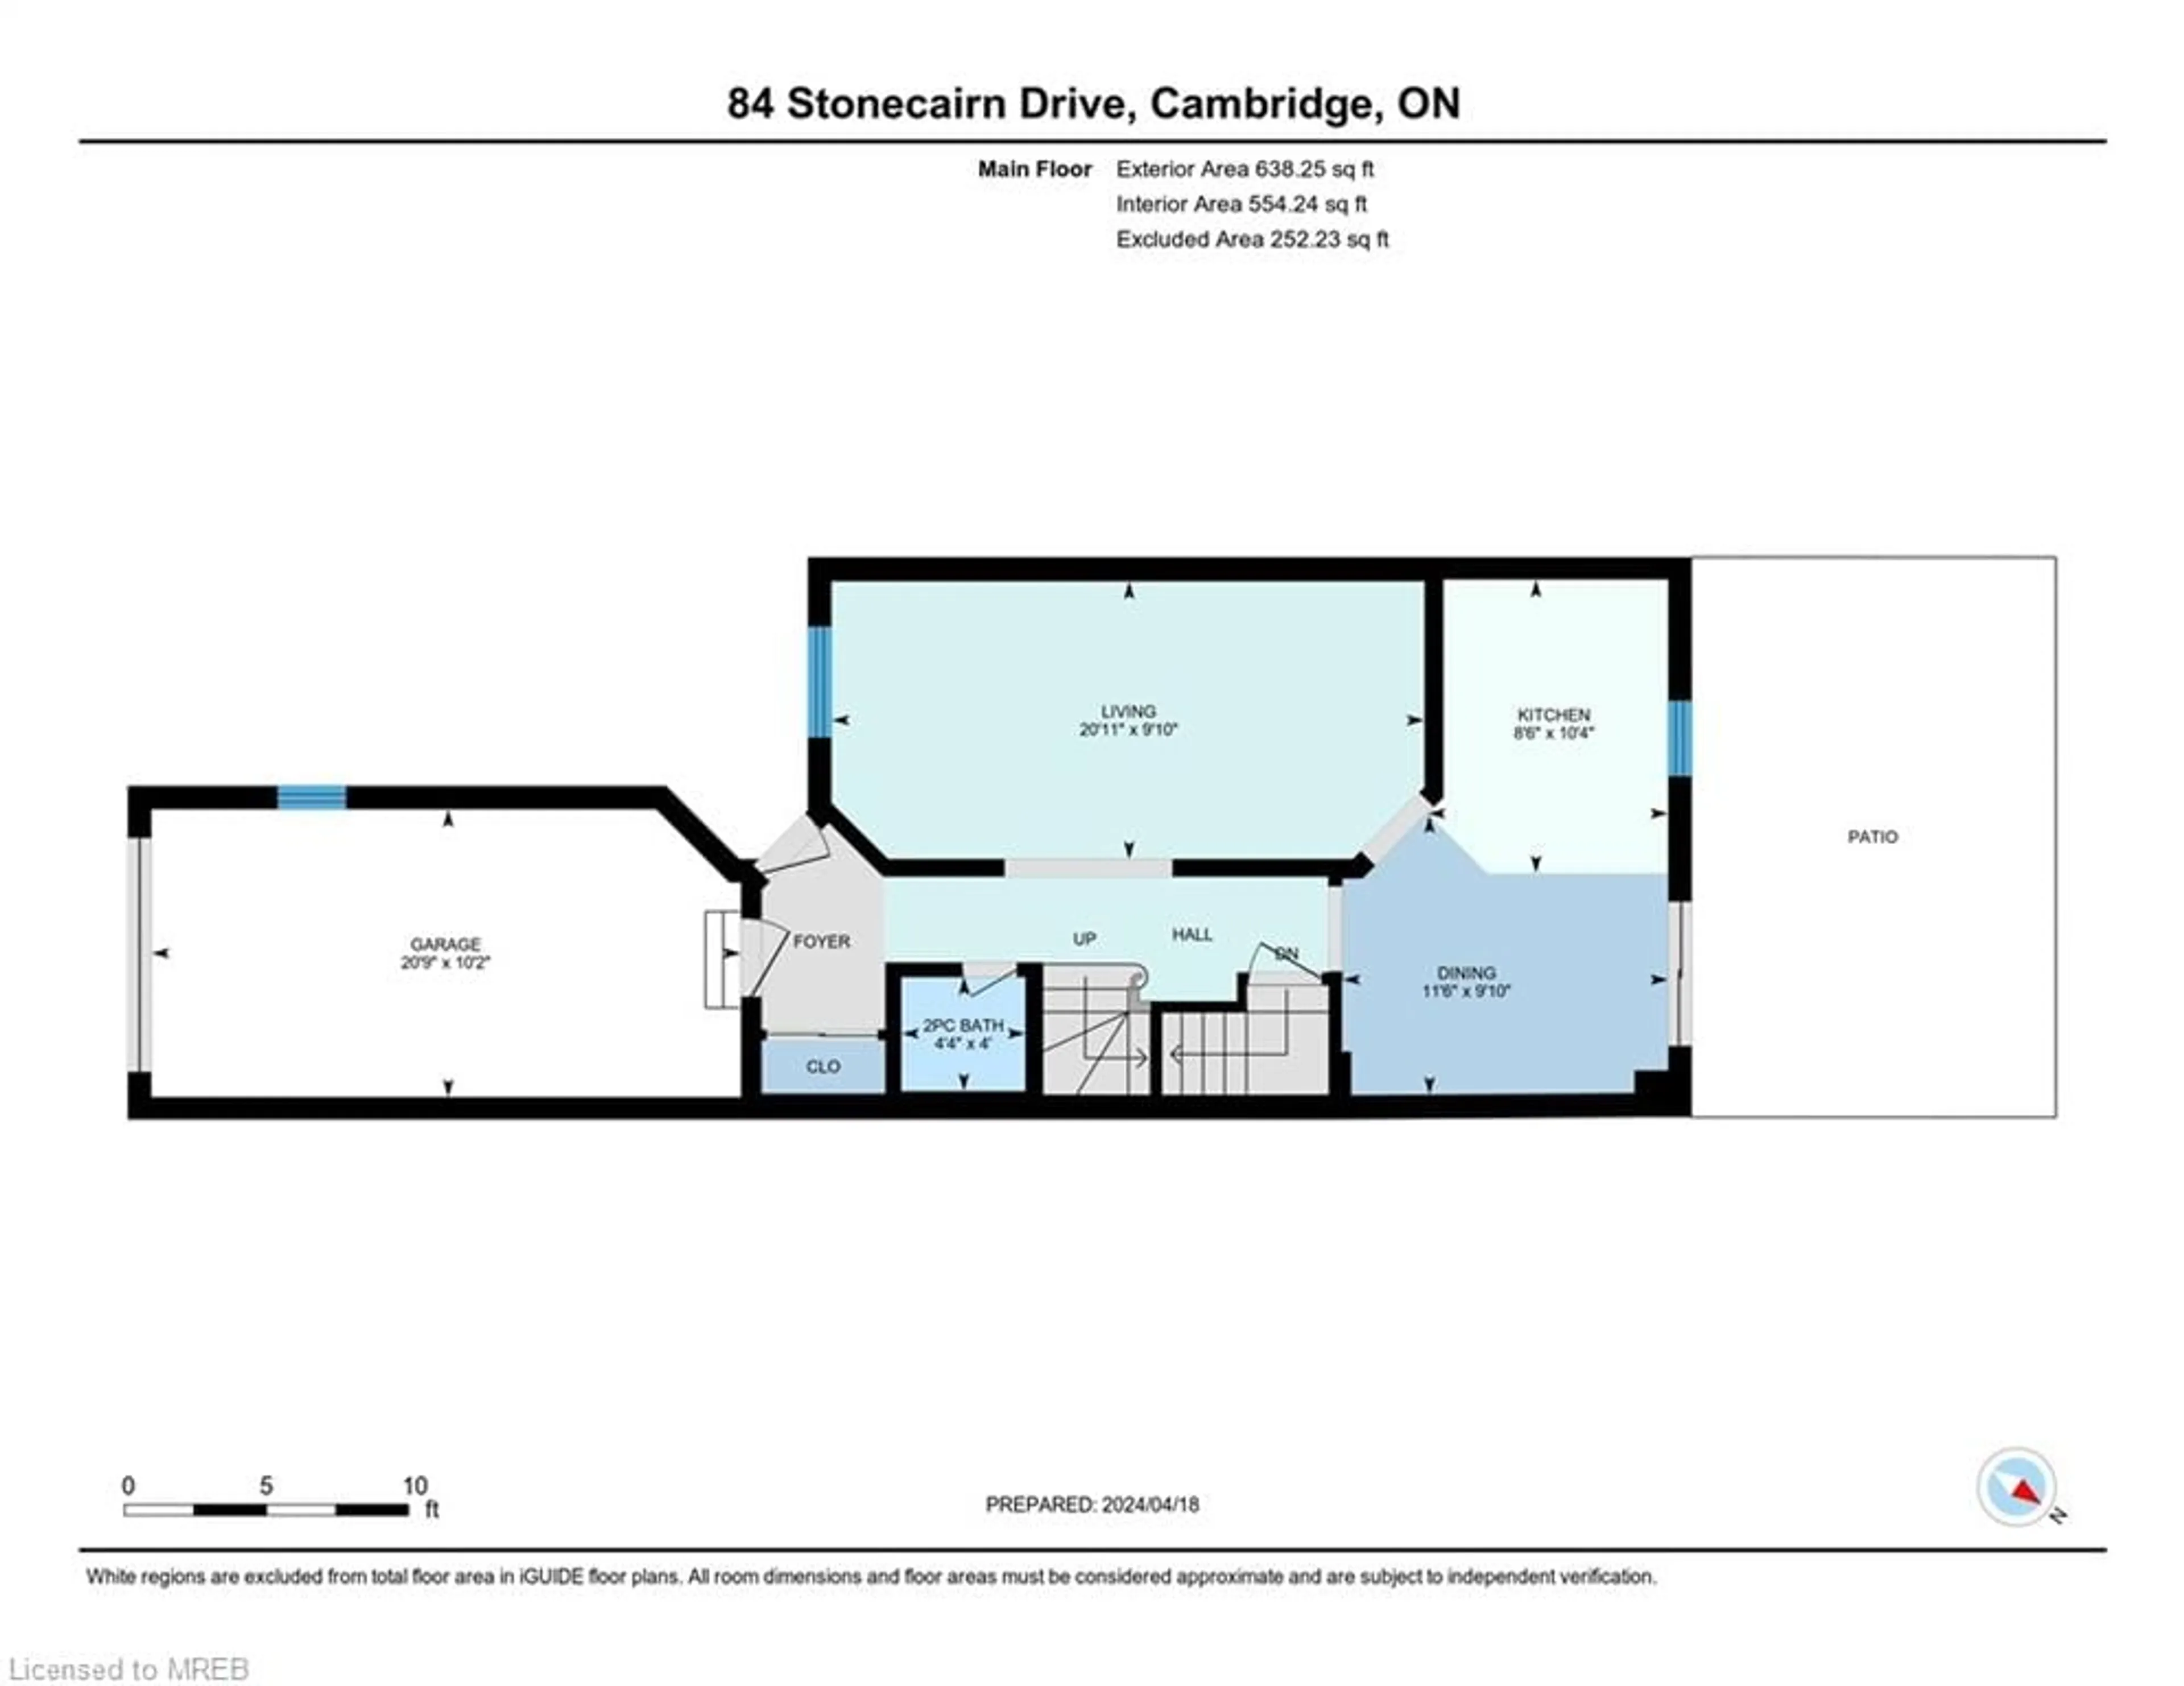 Floor plan for 84 Stonecairn Dr, Cambridge Ontario N1T 1W3